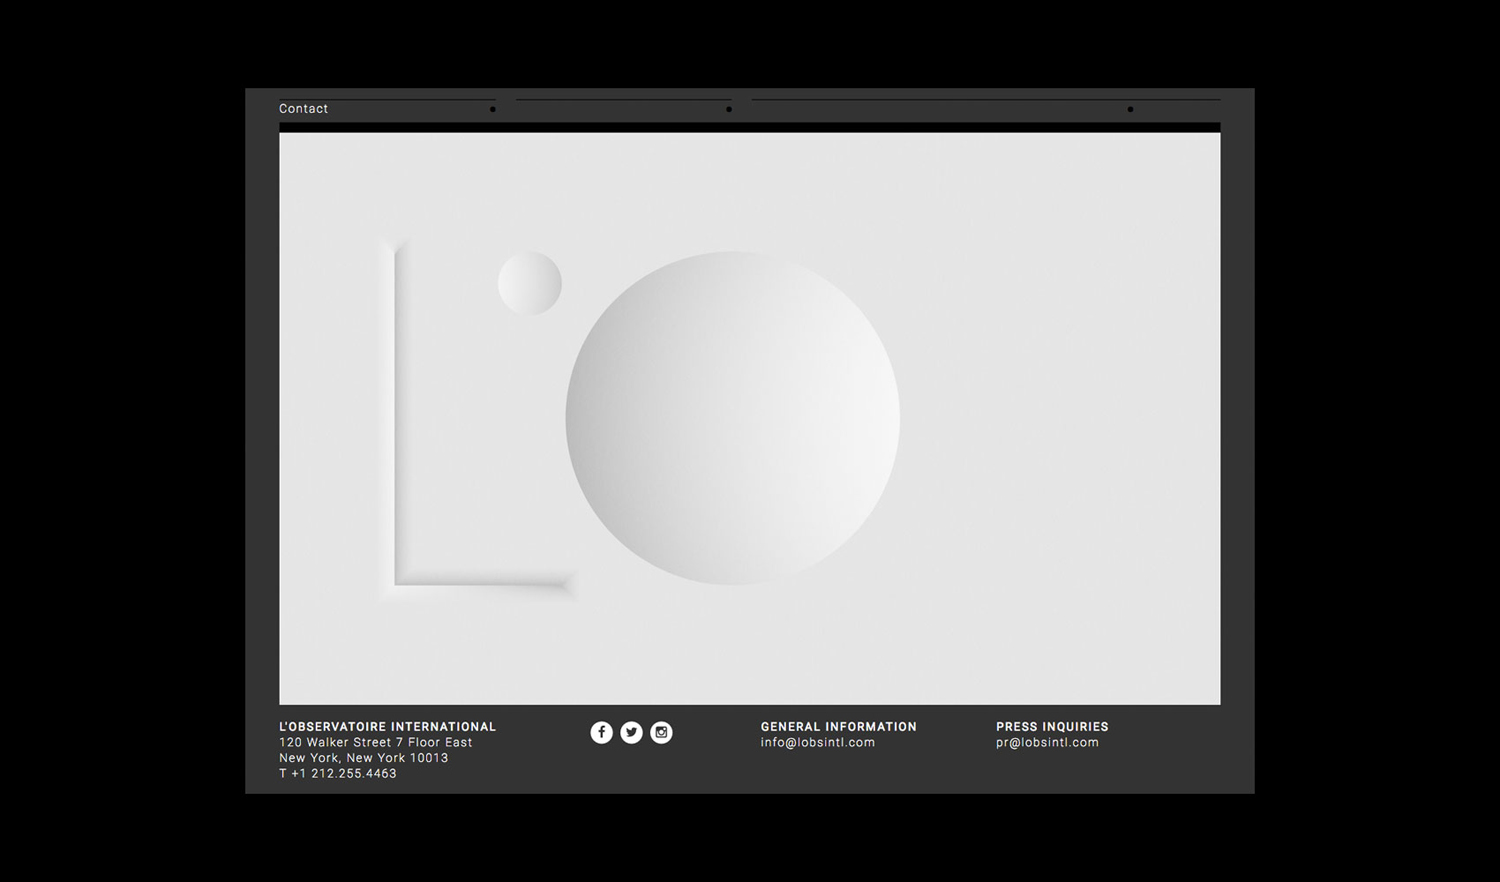 Brand identity and website by New York based design studio Triboro for lighting design studio L'Observatoire